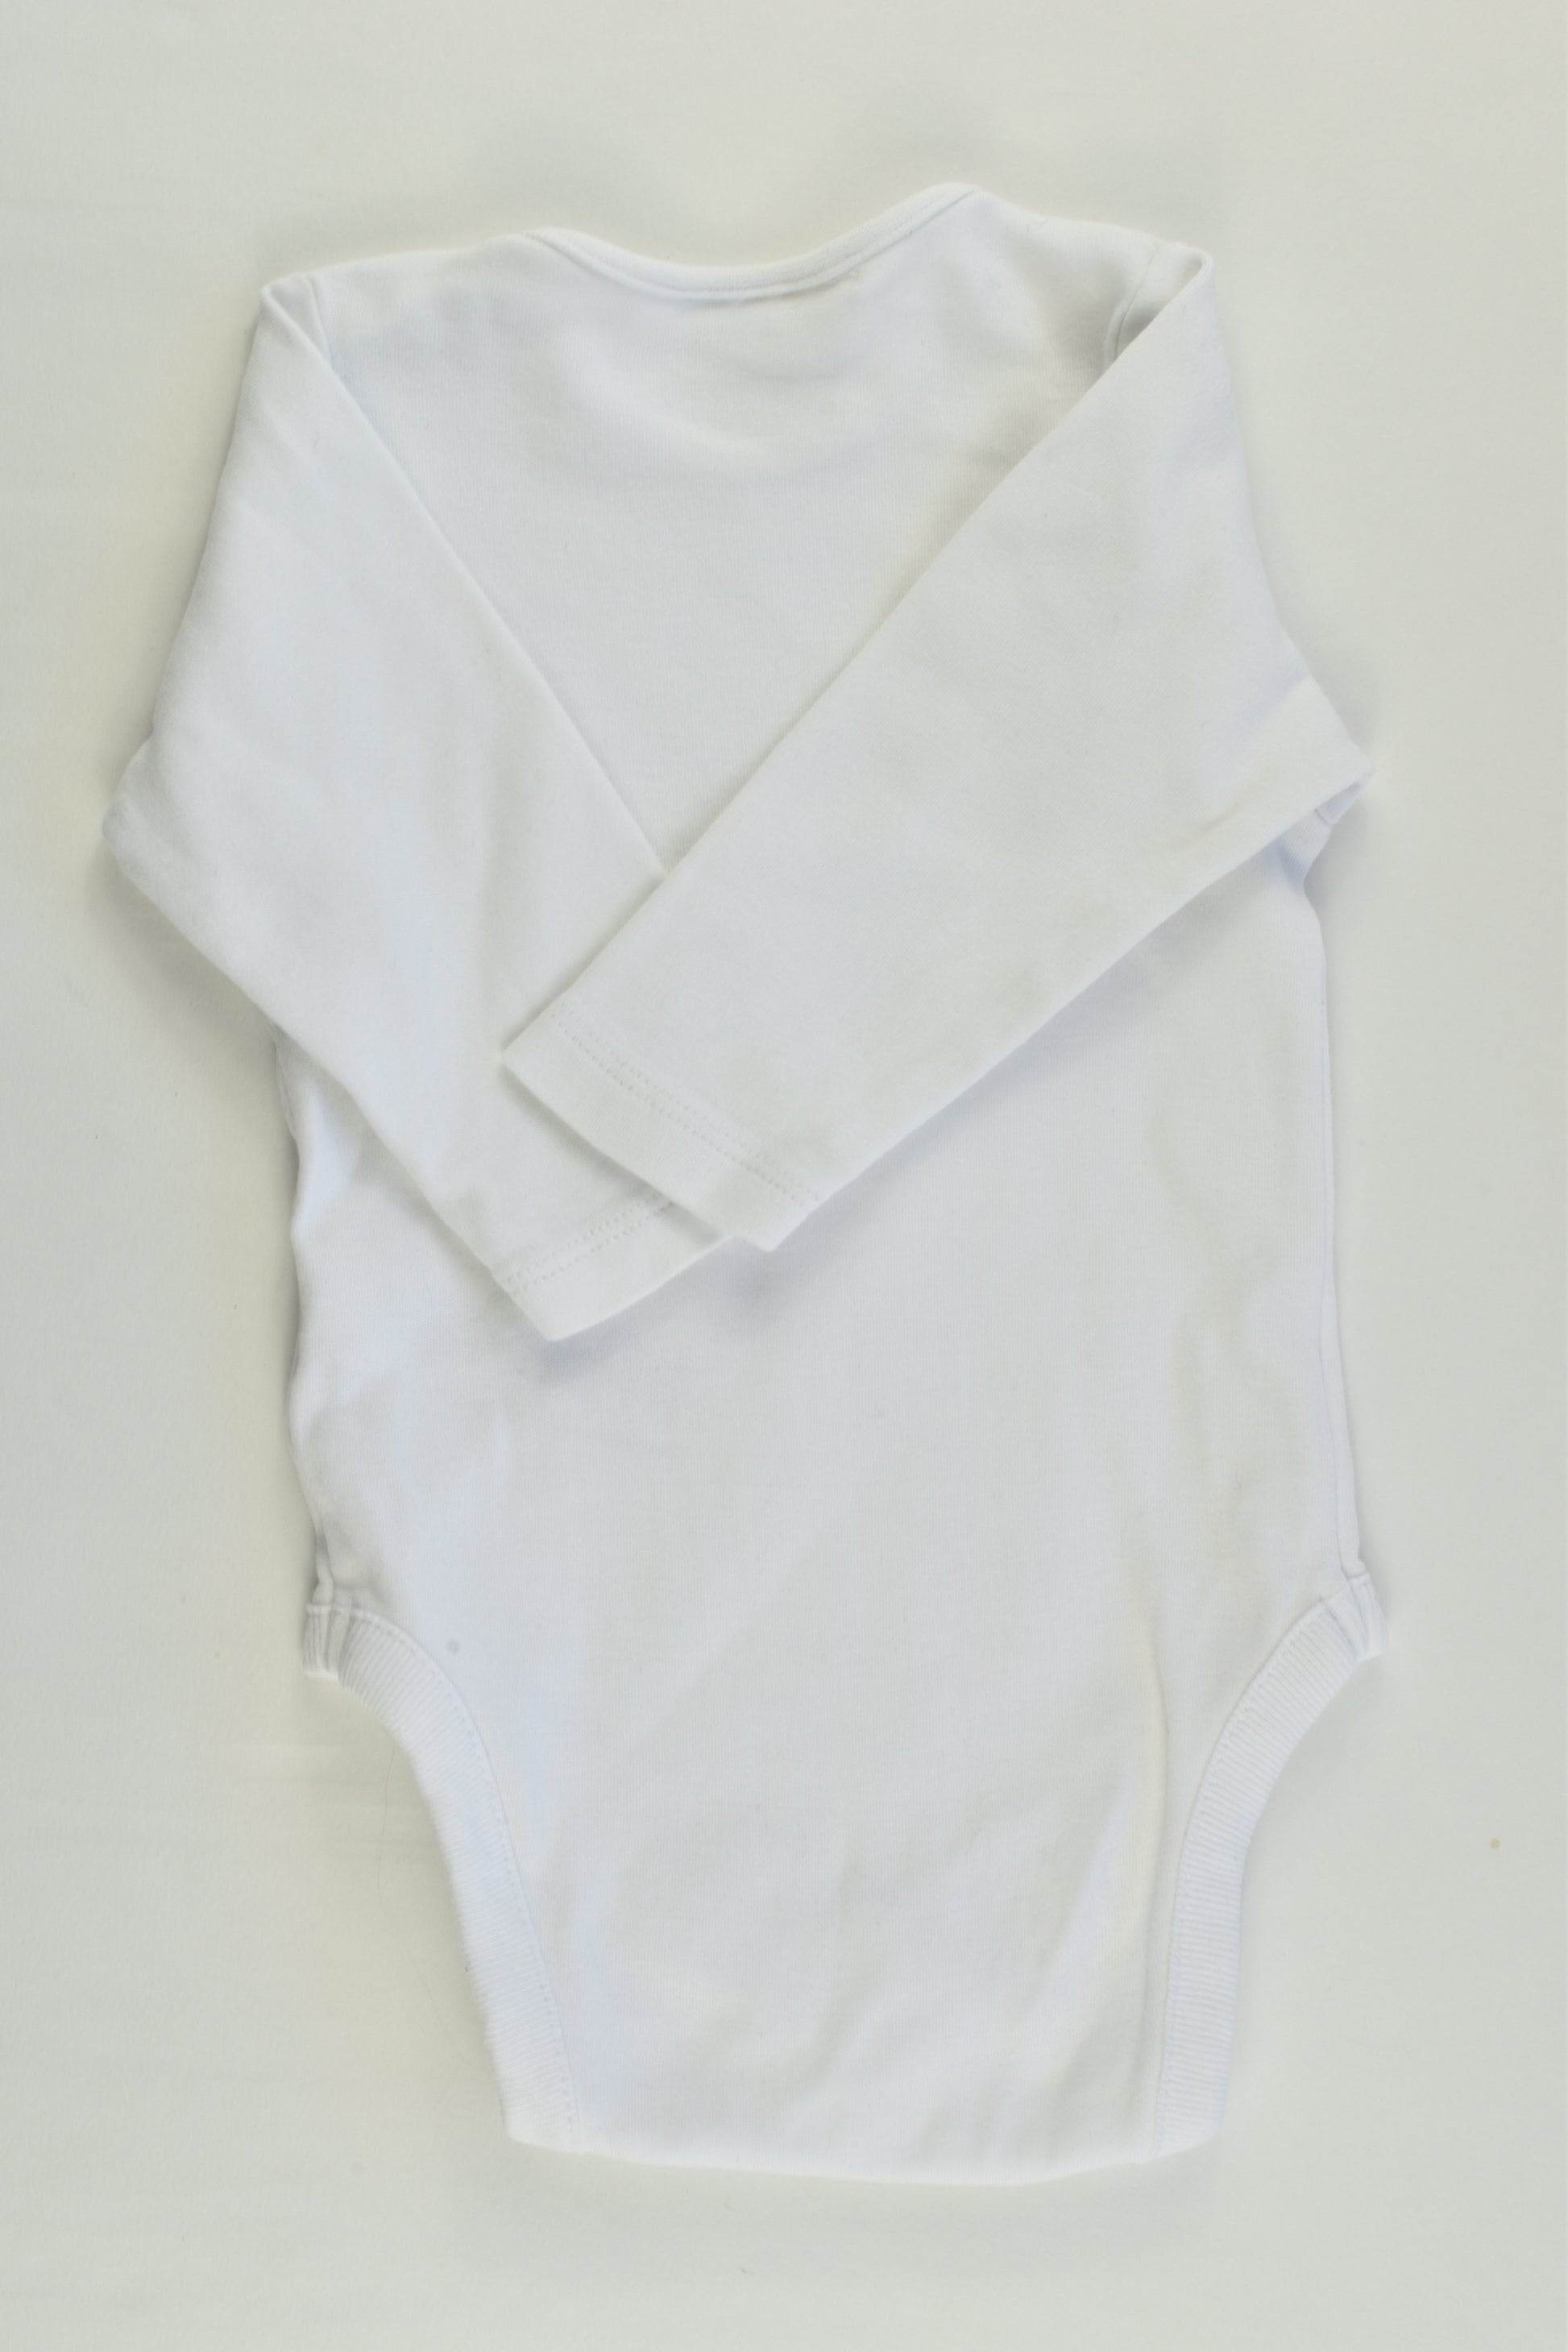 Next (UK) Size 00 (3-6 months) White Bodysuit